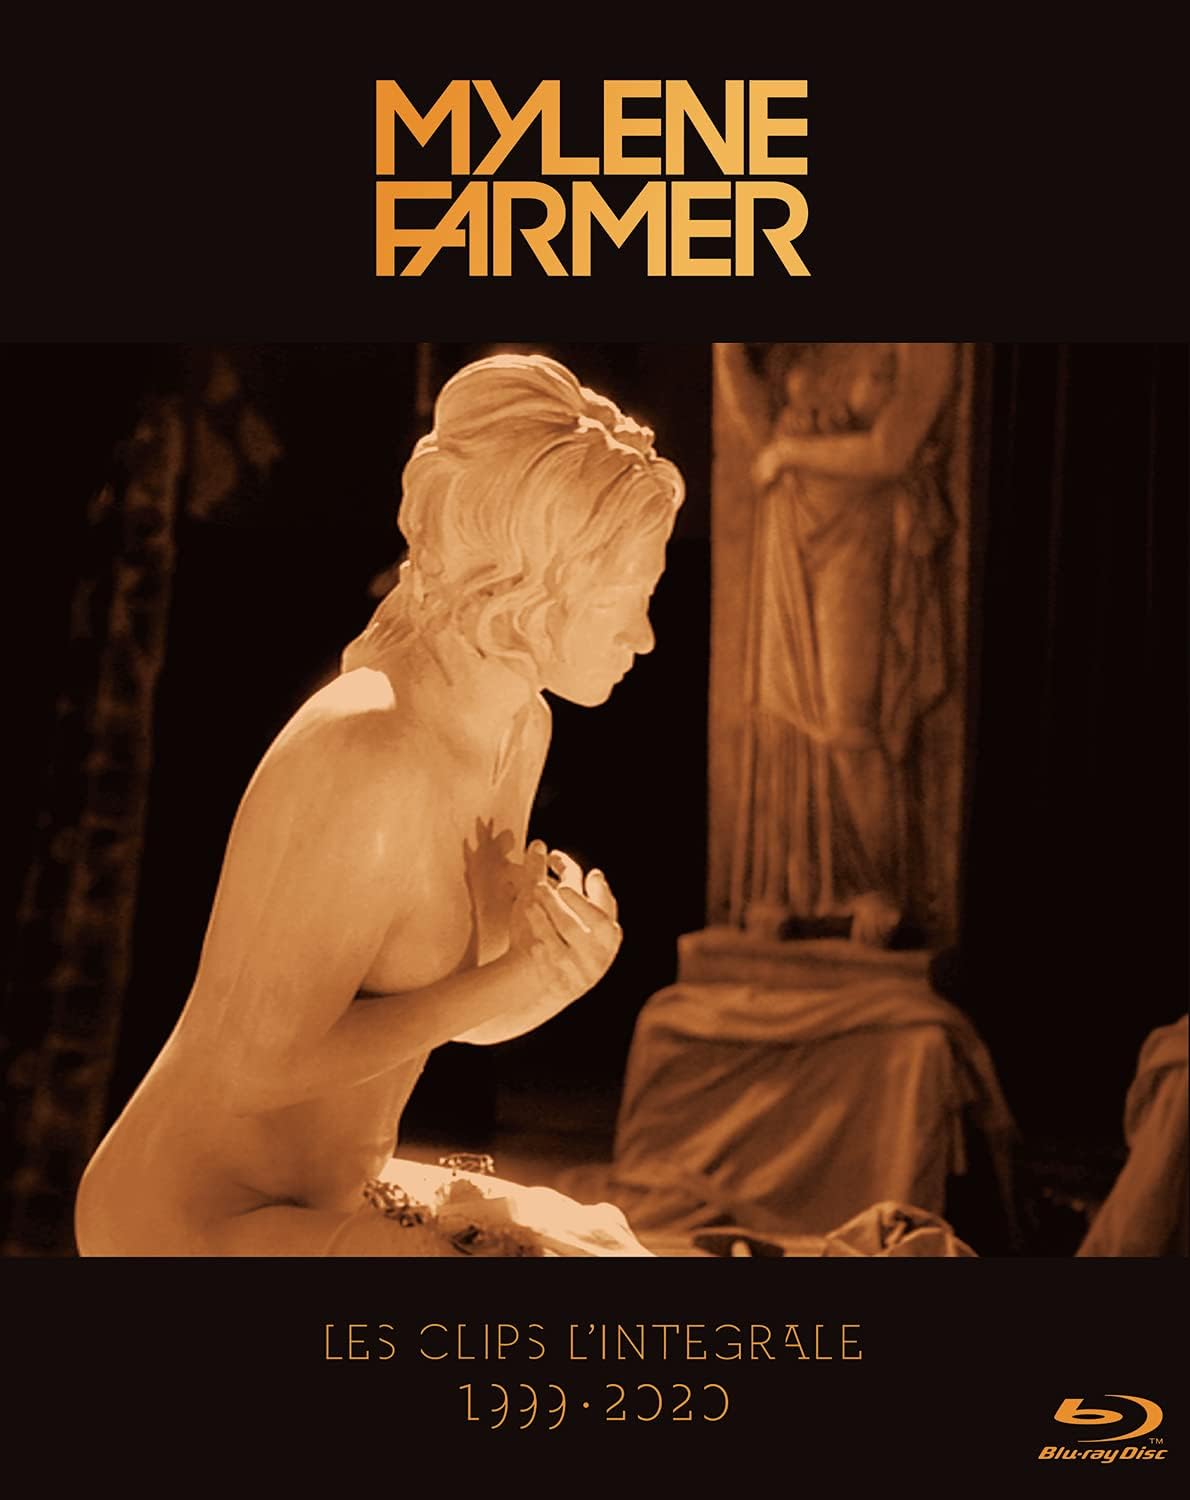 Mylene Farmer - L'intégrale des clips 1999 - 2020 (2 Blu-ray)